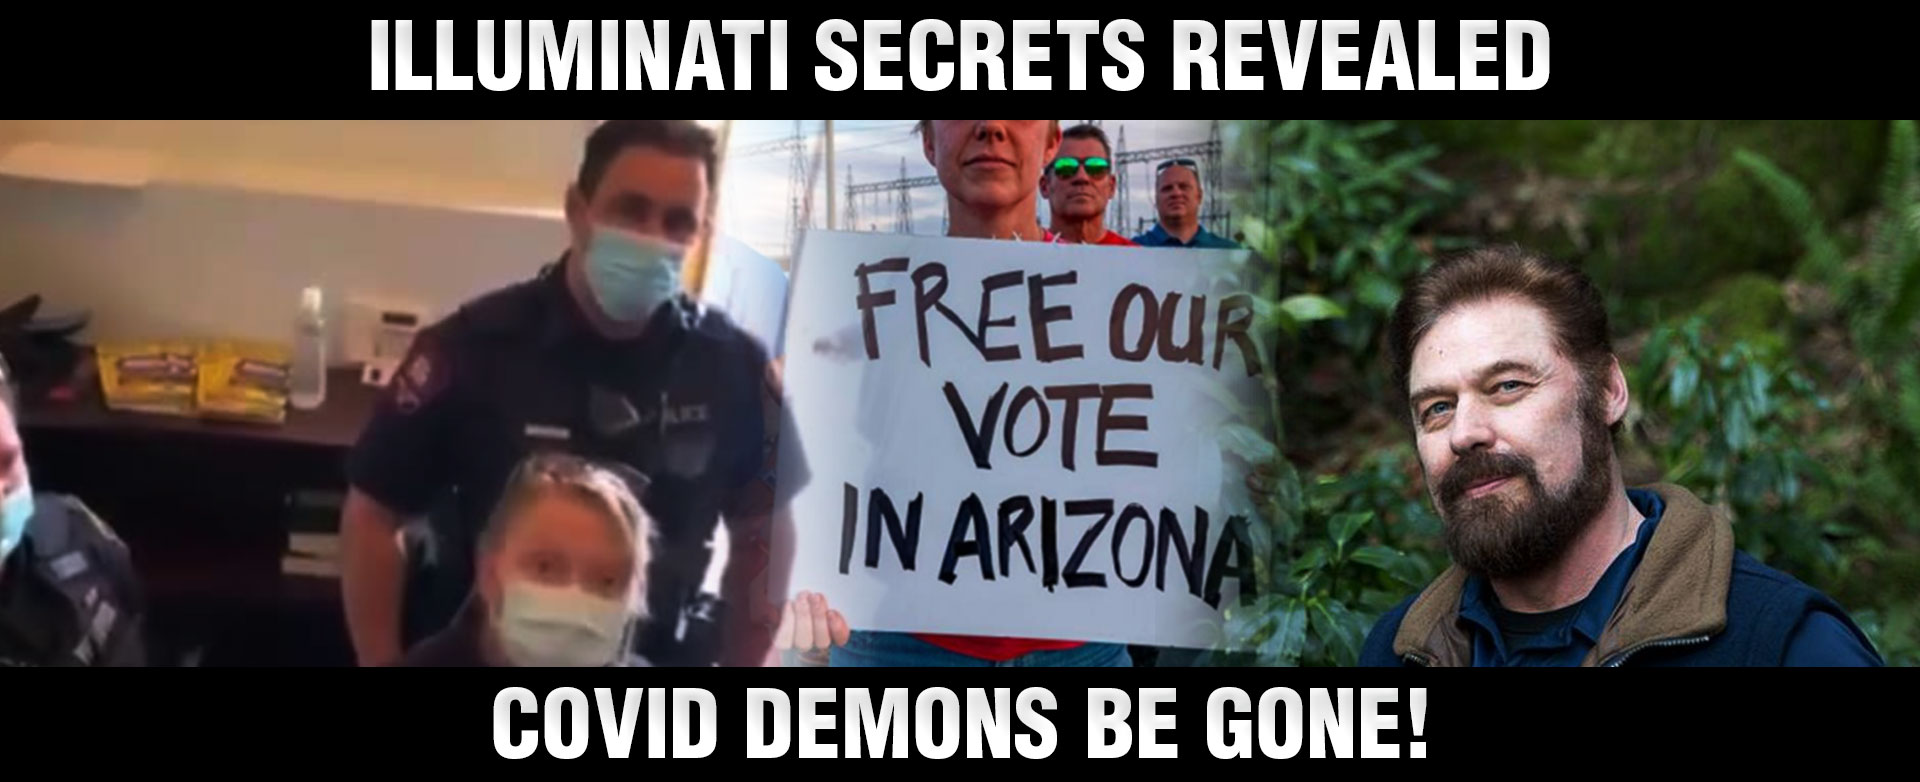 MyPatriotsNetwork-Action Needed! Plus, Illuminati Secrets Revealed & COVID Demons Be Gone! April 5, 2021 Update